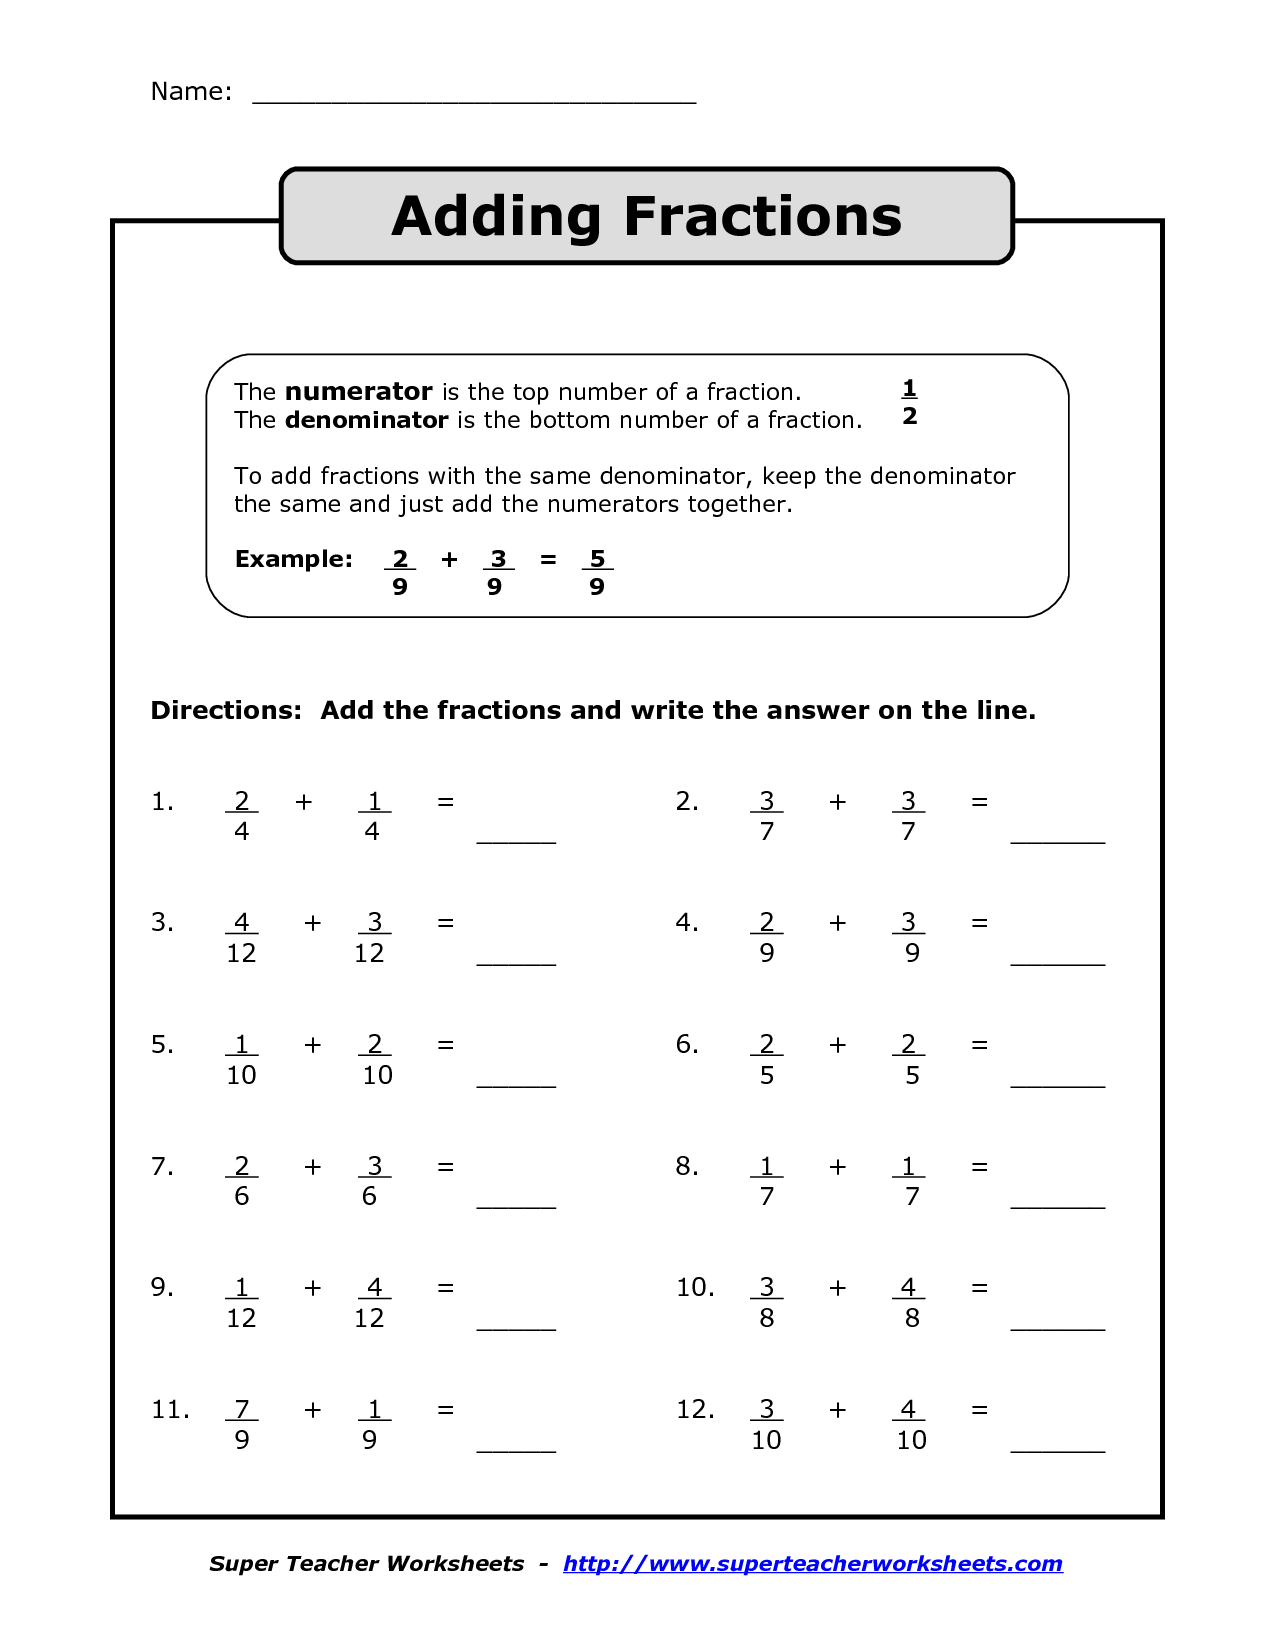 Adding Fractions Worksheets 4th Grade Image